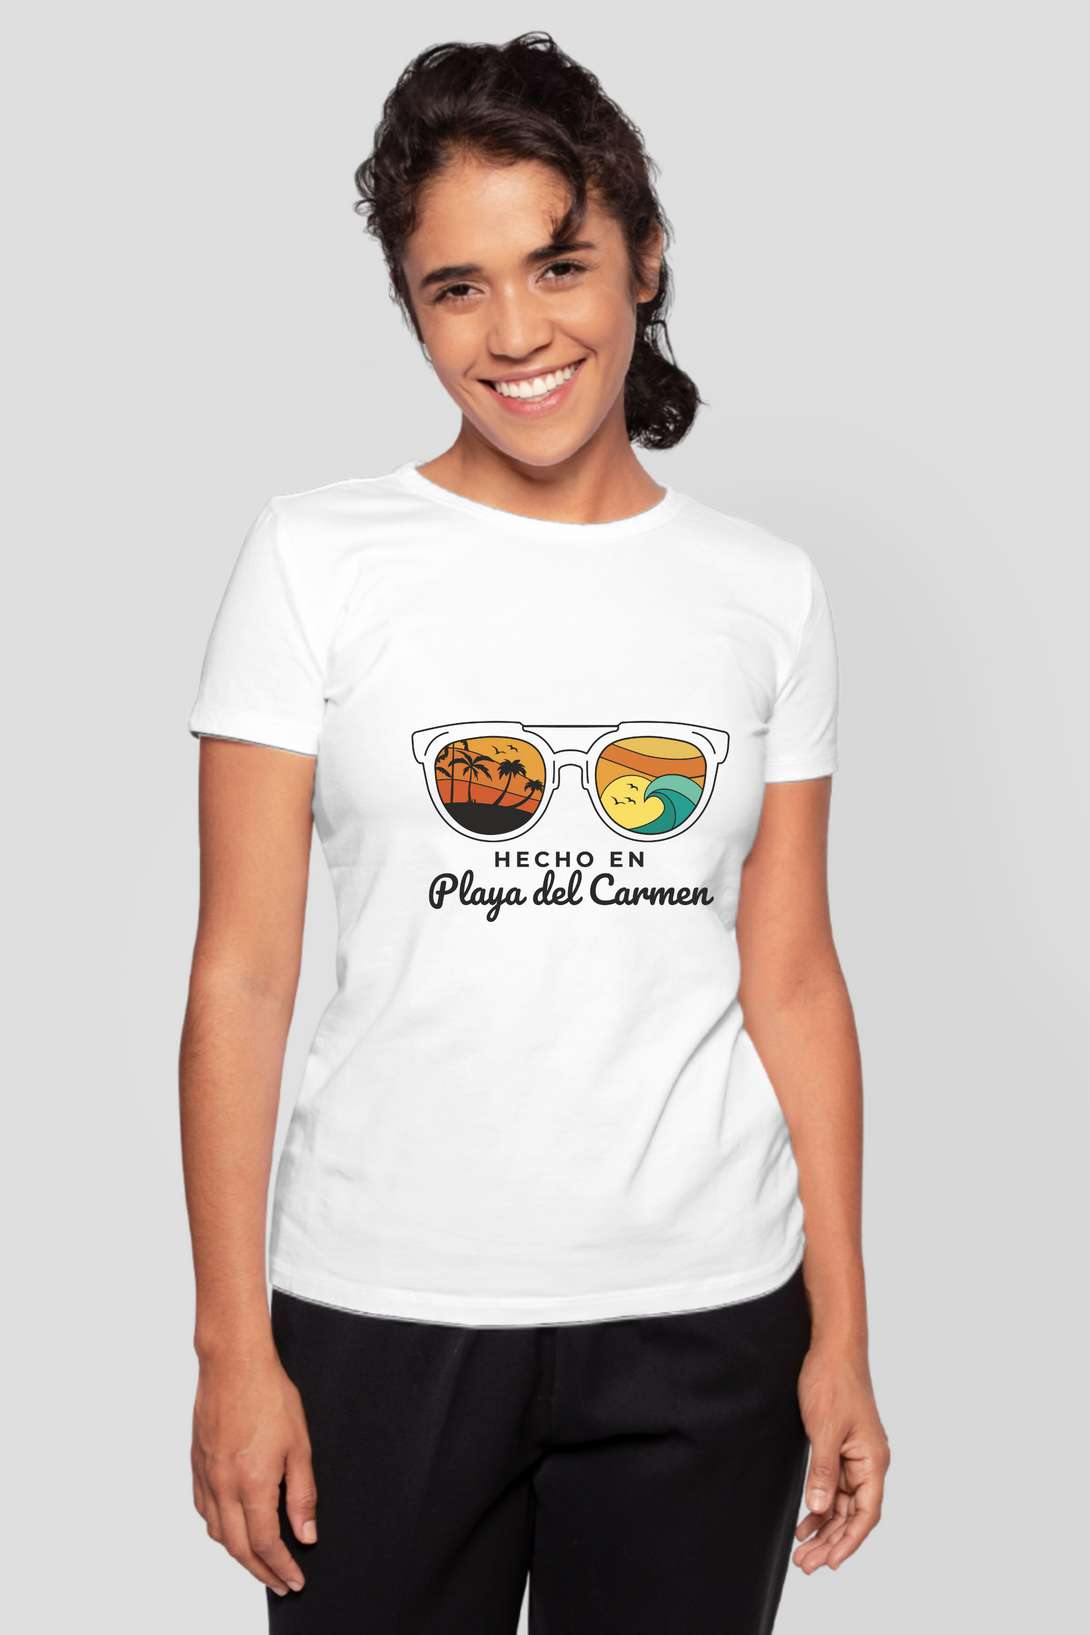 Made In Playa Del Carmen Printed T-Shirt For Women - WowWaves - 8